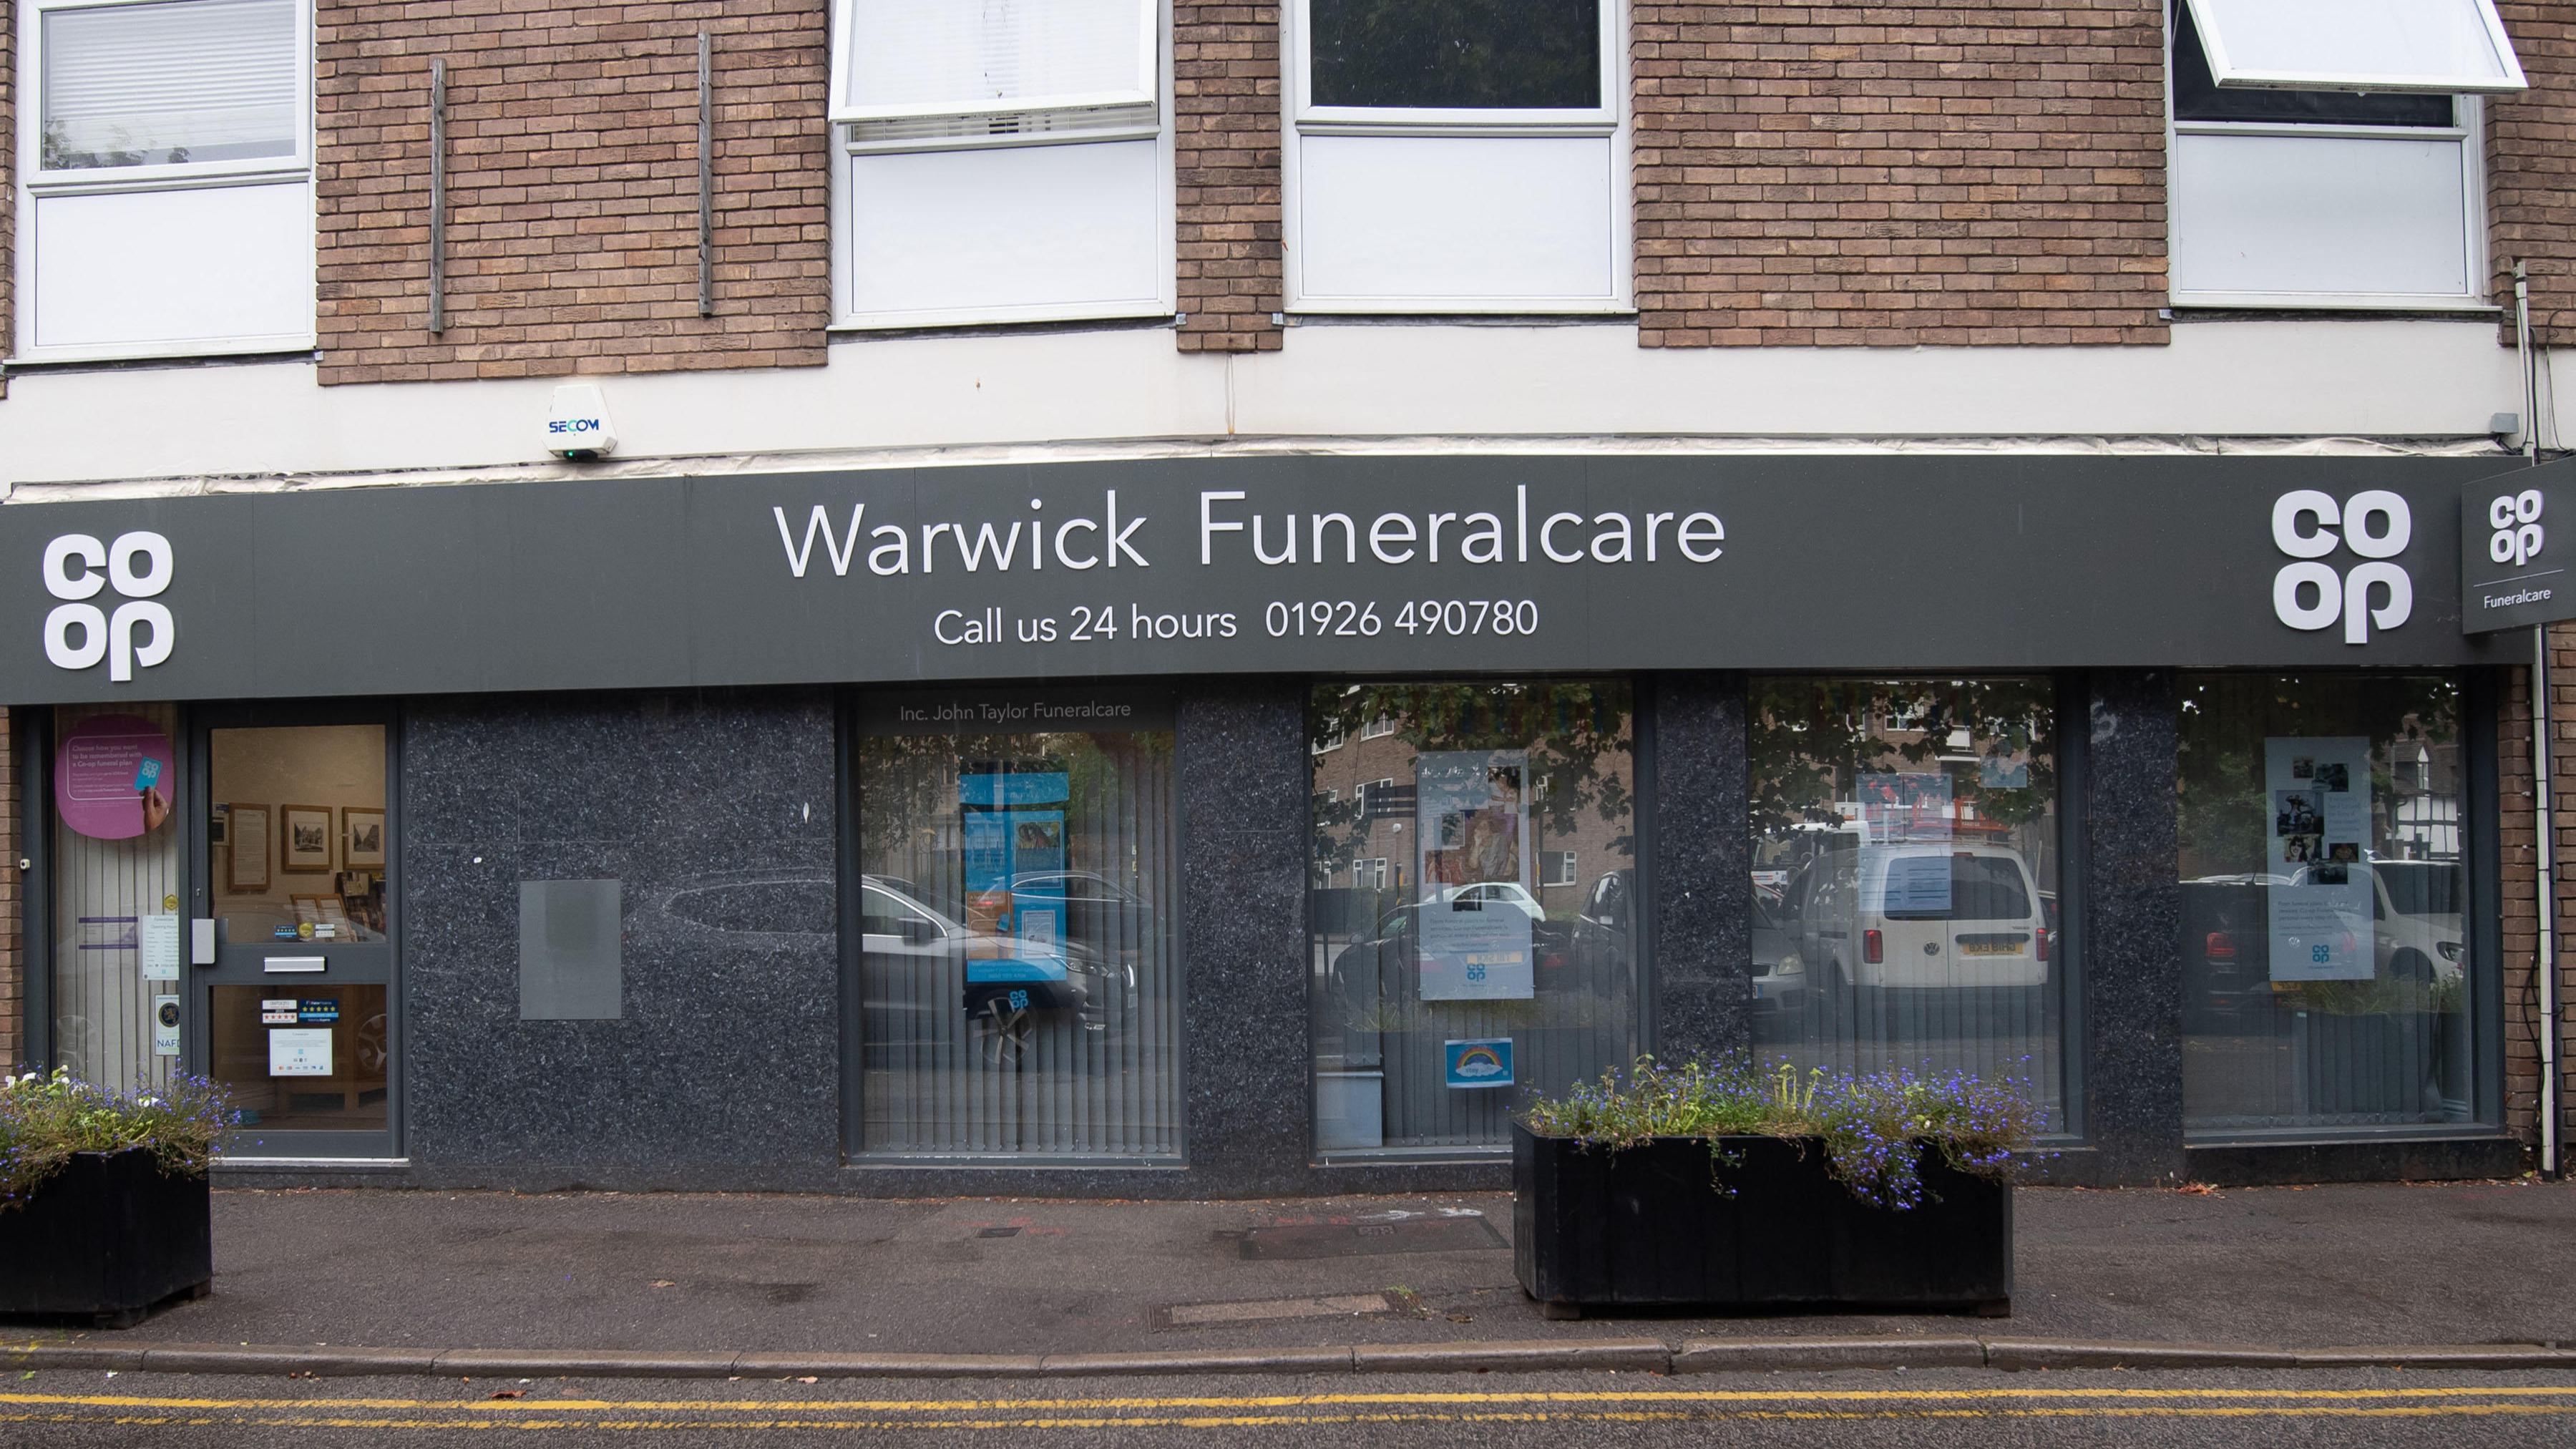 John Taylor Funeralcare Warwick Warwick Funeralcare (inc John Taylor Funeralcare) Warwick 01926 490780